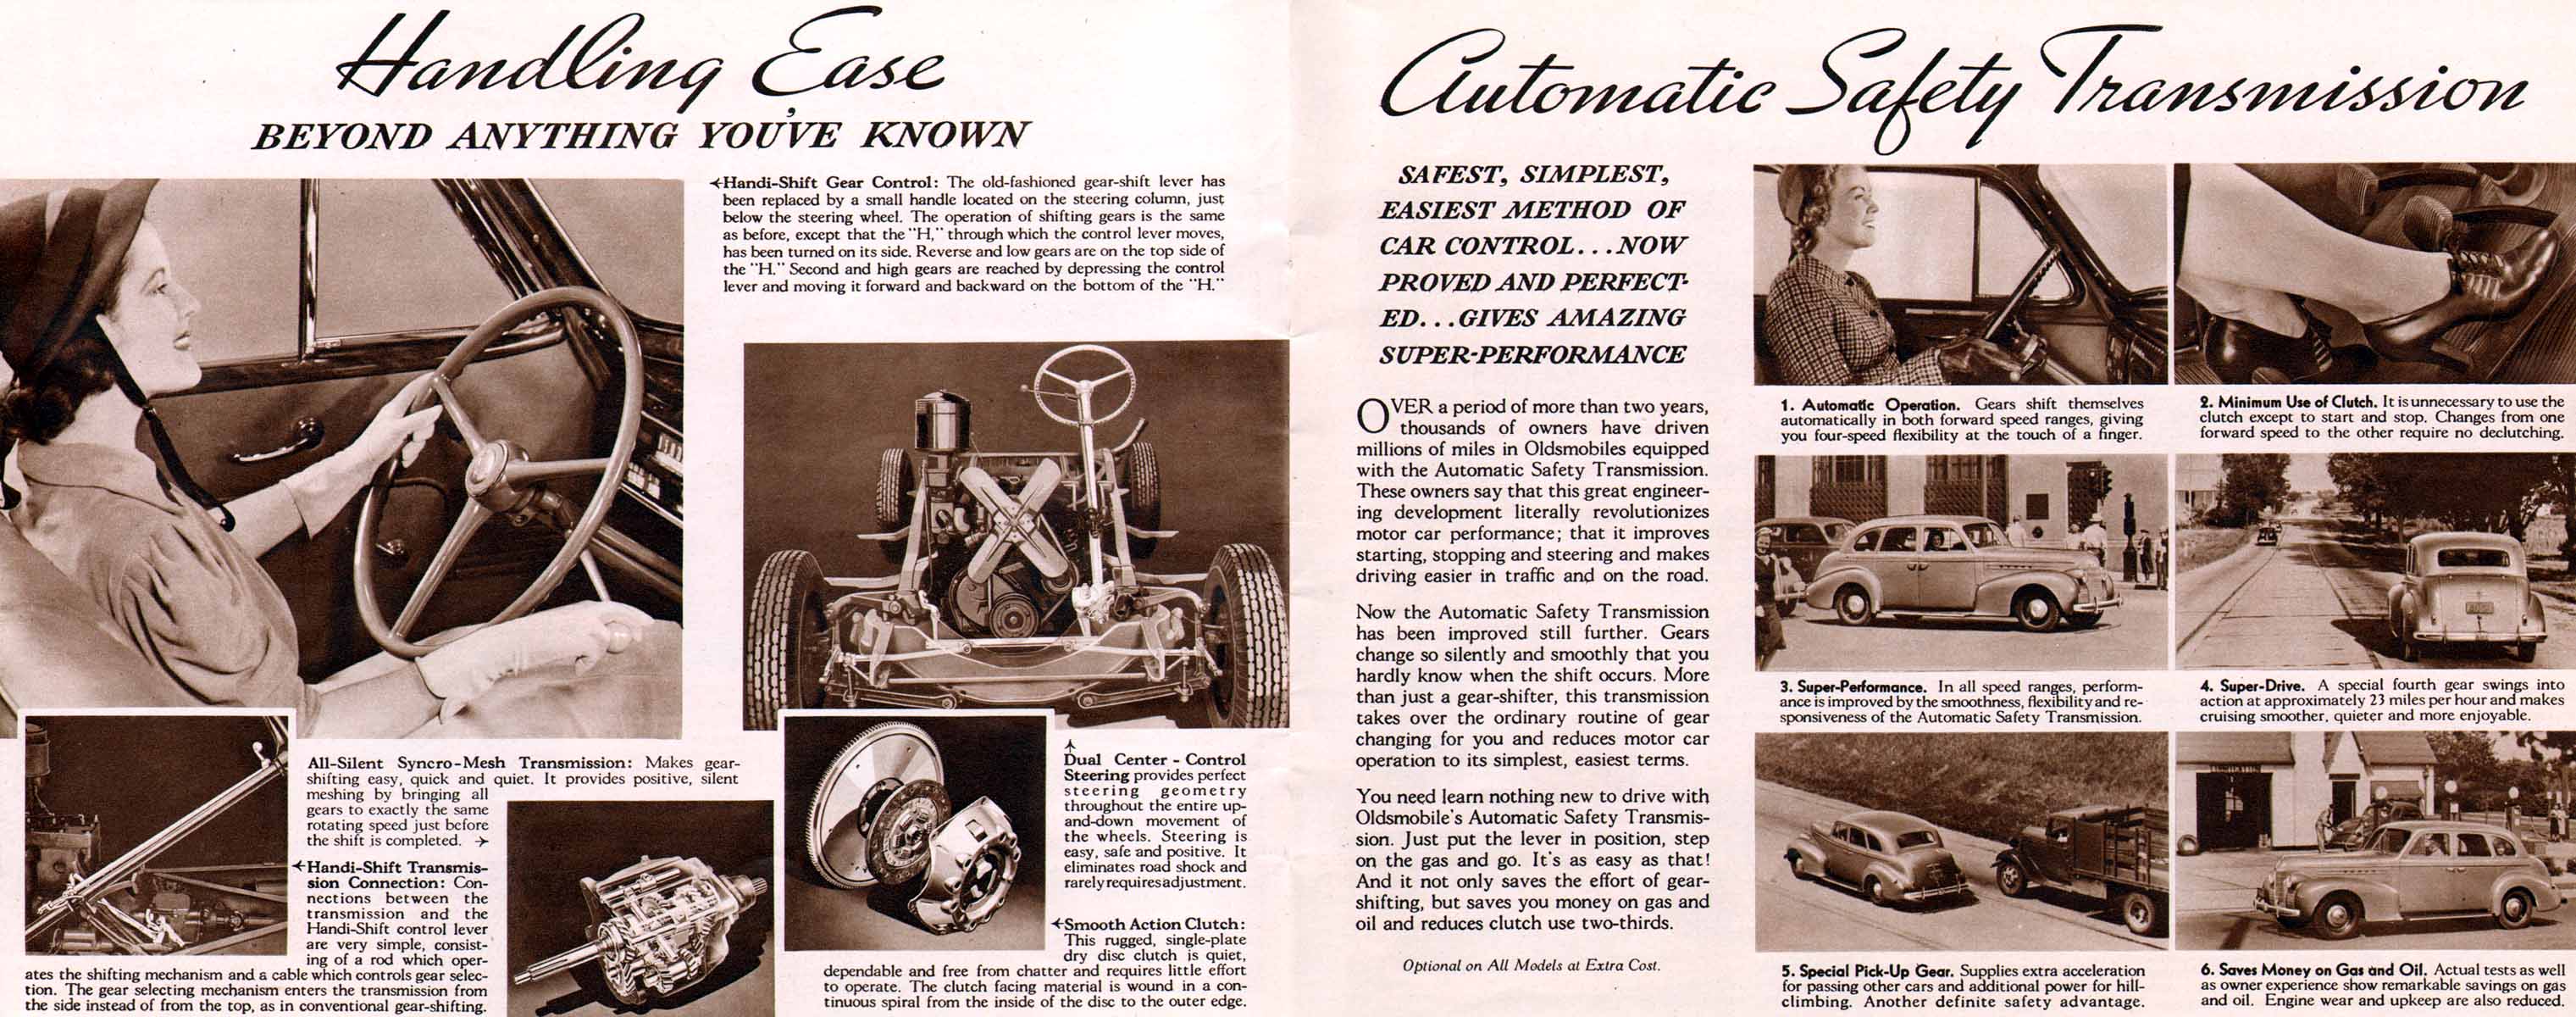 1939 Oldsmobile Motor Cars Brochure Page 7